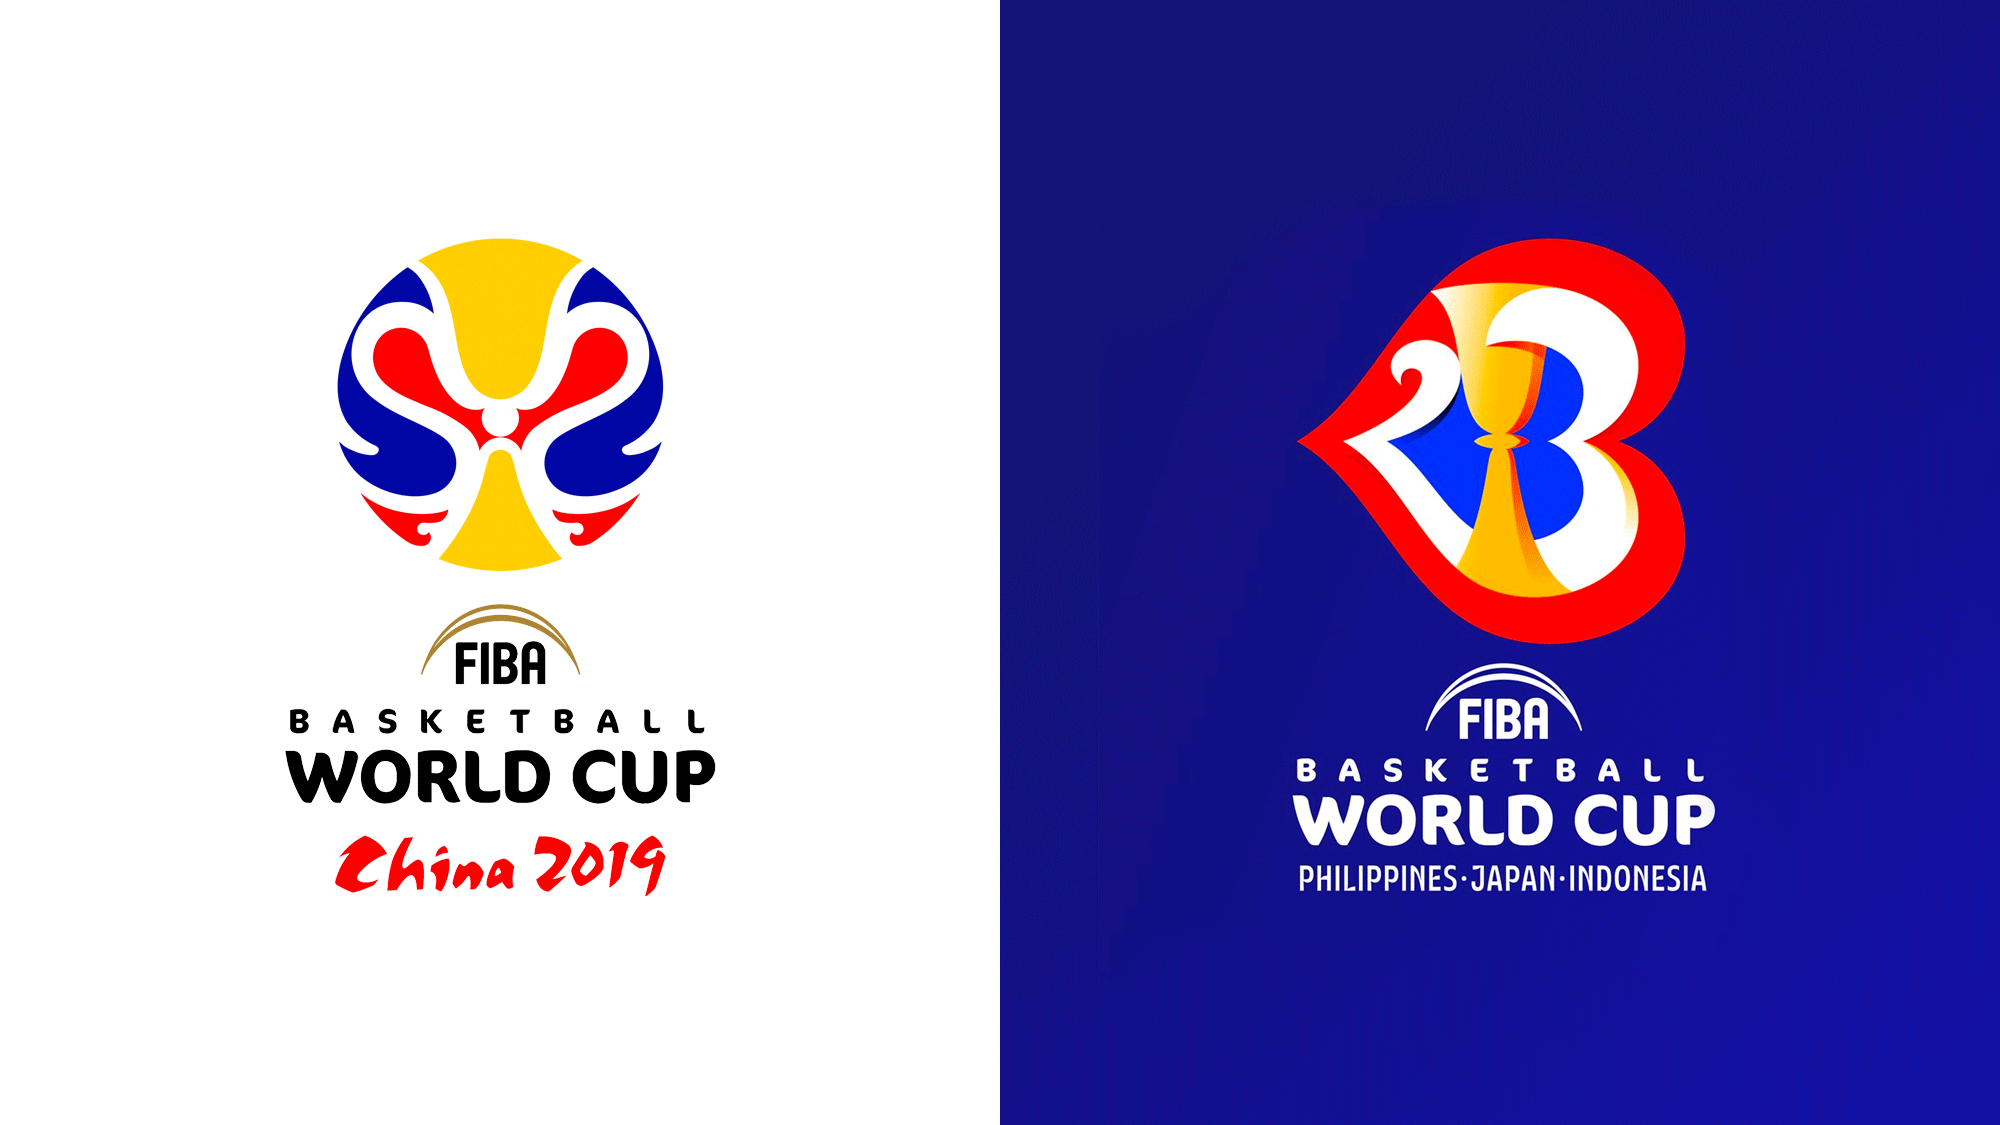 Brand New New Logo for FIBA Basketball World Cup 2023